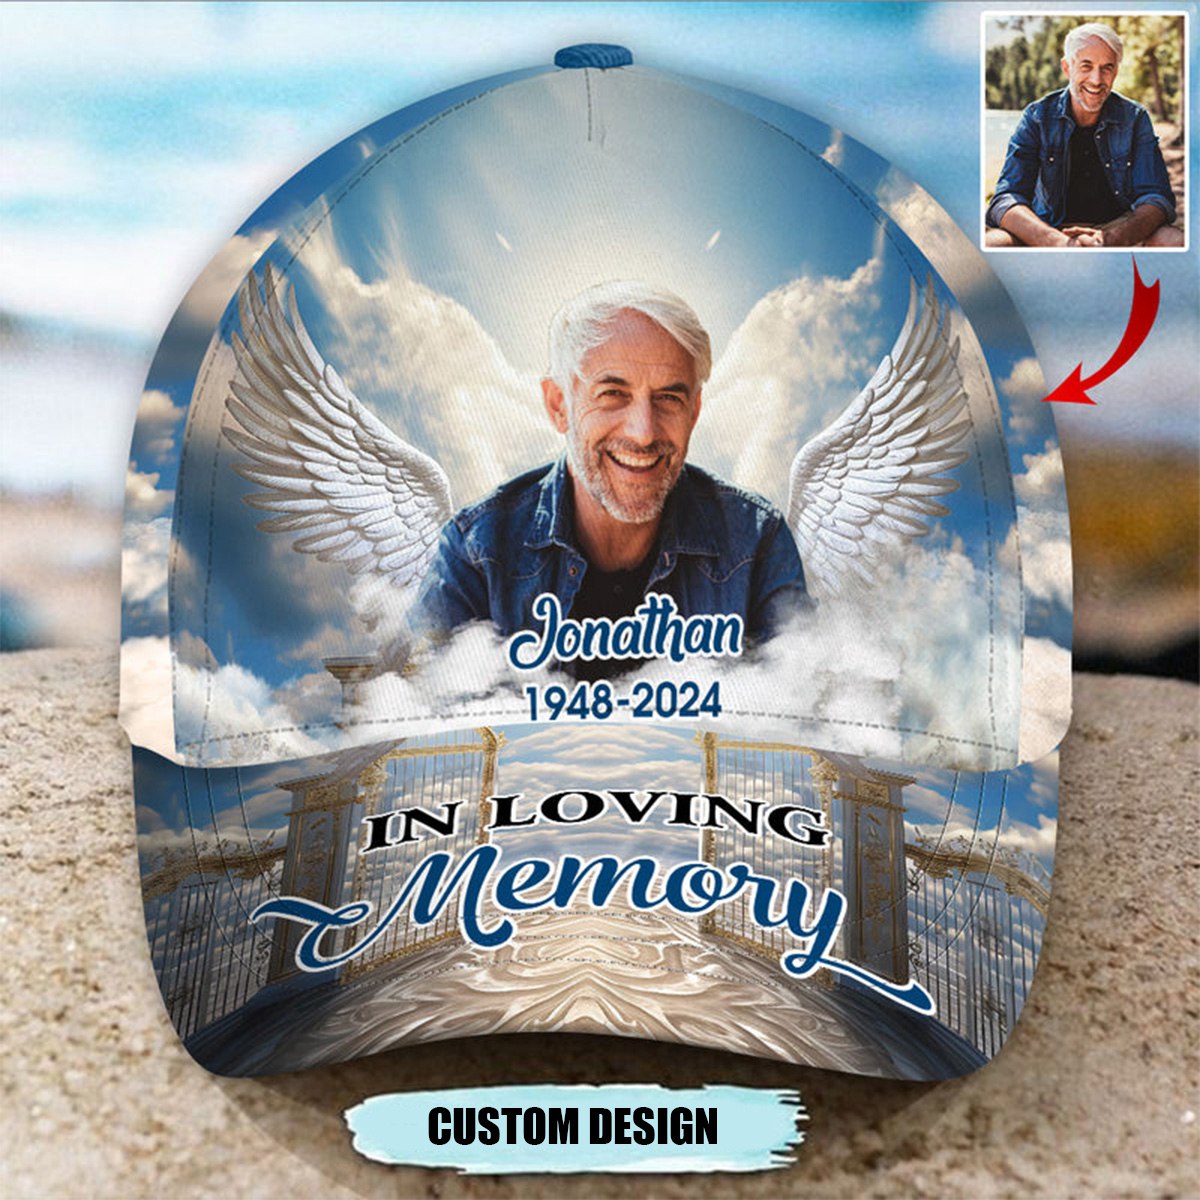 Memorial Insert Image Angel Wings Golden Gate, In Loving Memory Personalized Classic Cap